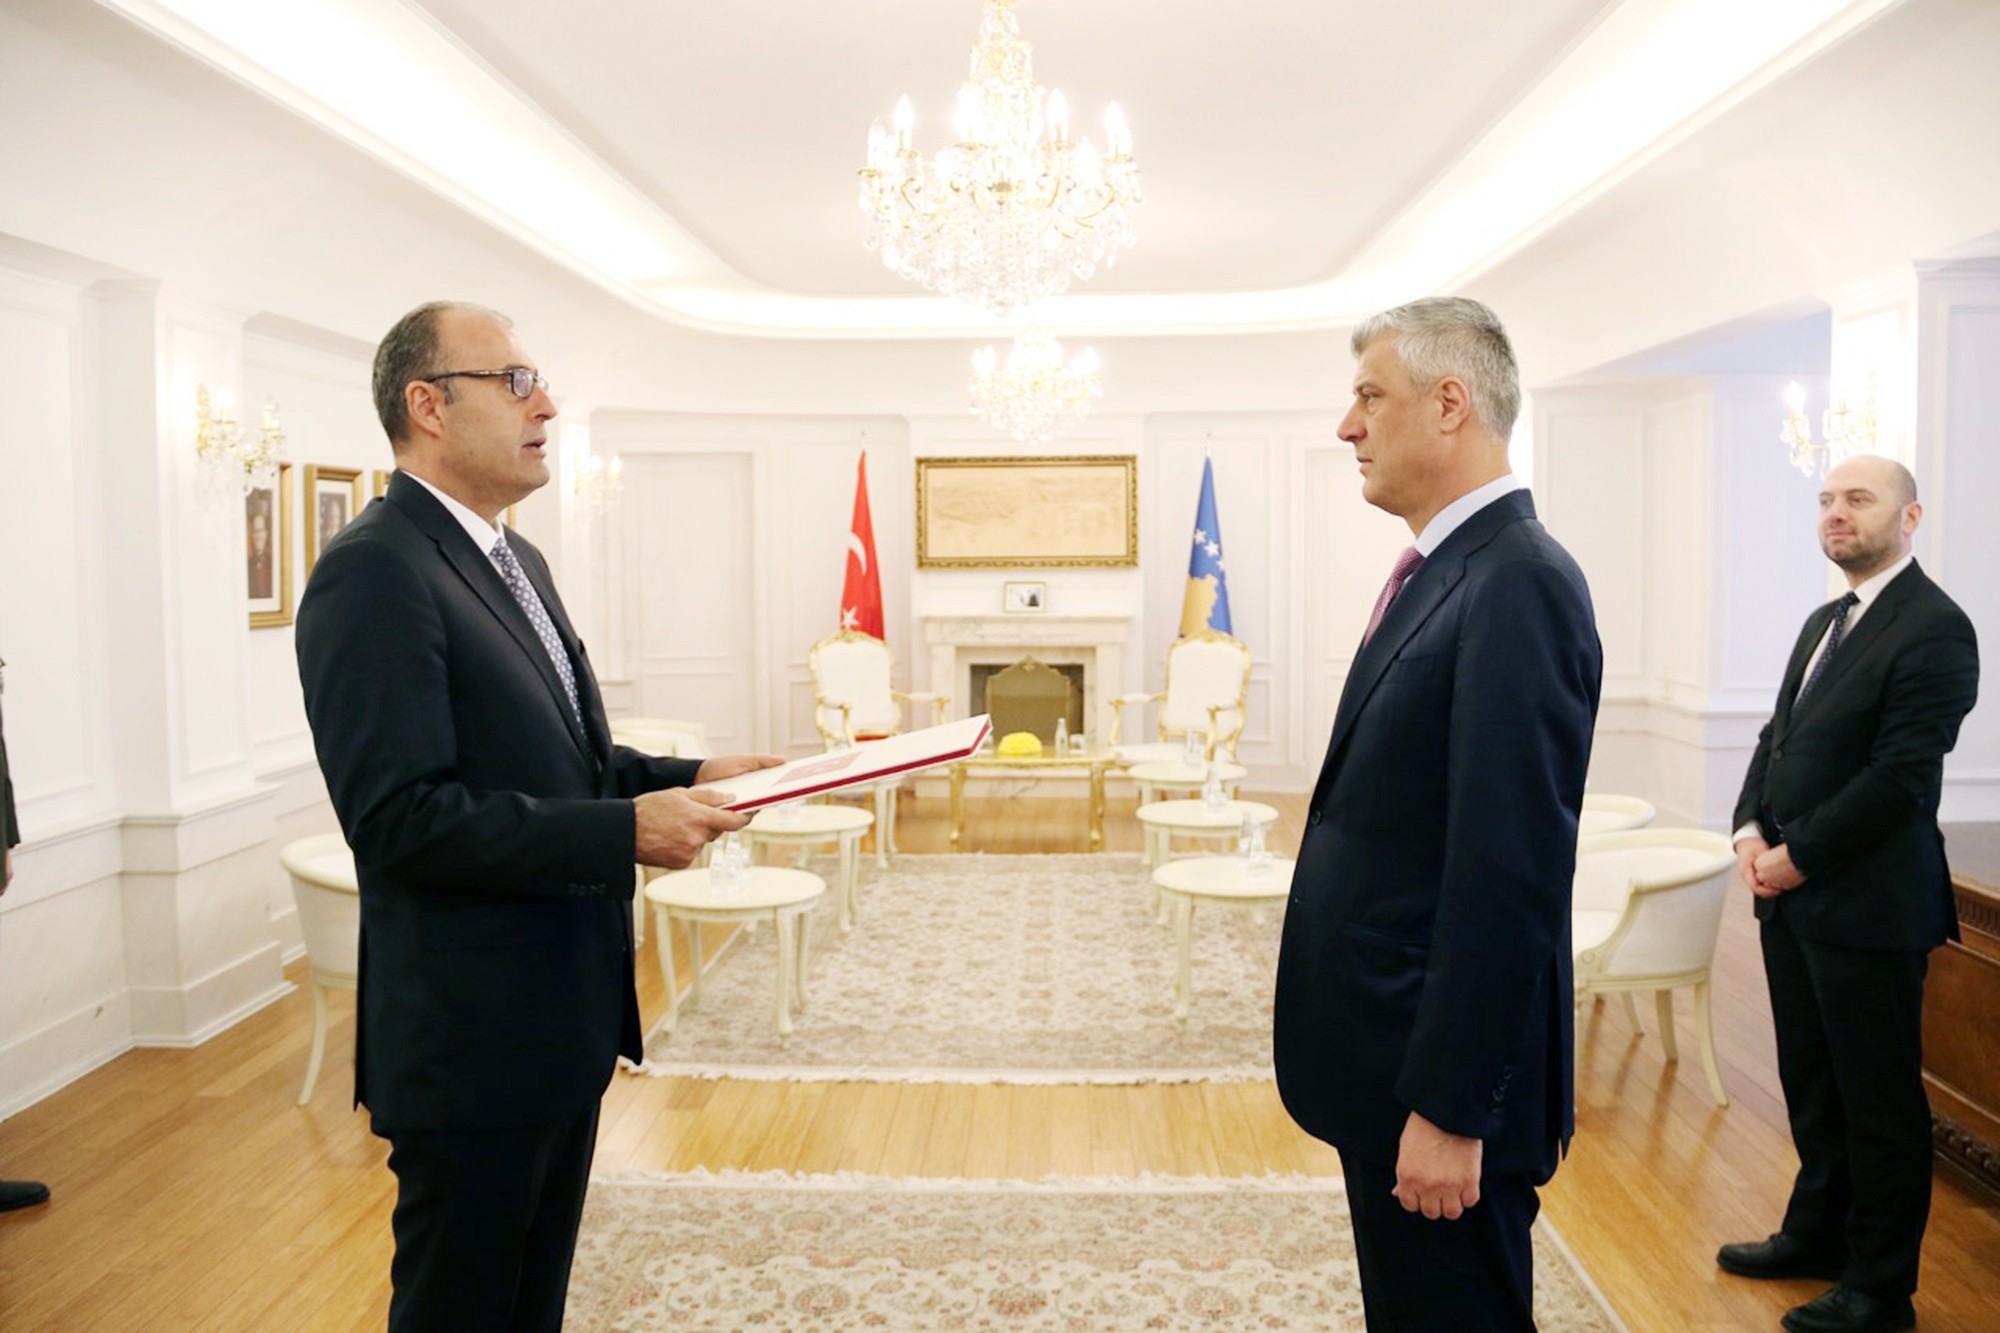 Presidenti Thaçi pranon letrat kredenciale nga ambasadori i ri i Turqisë